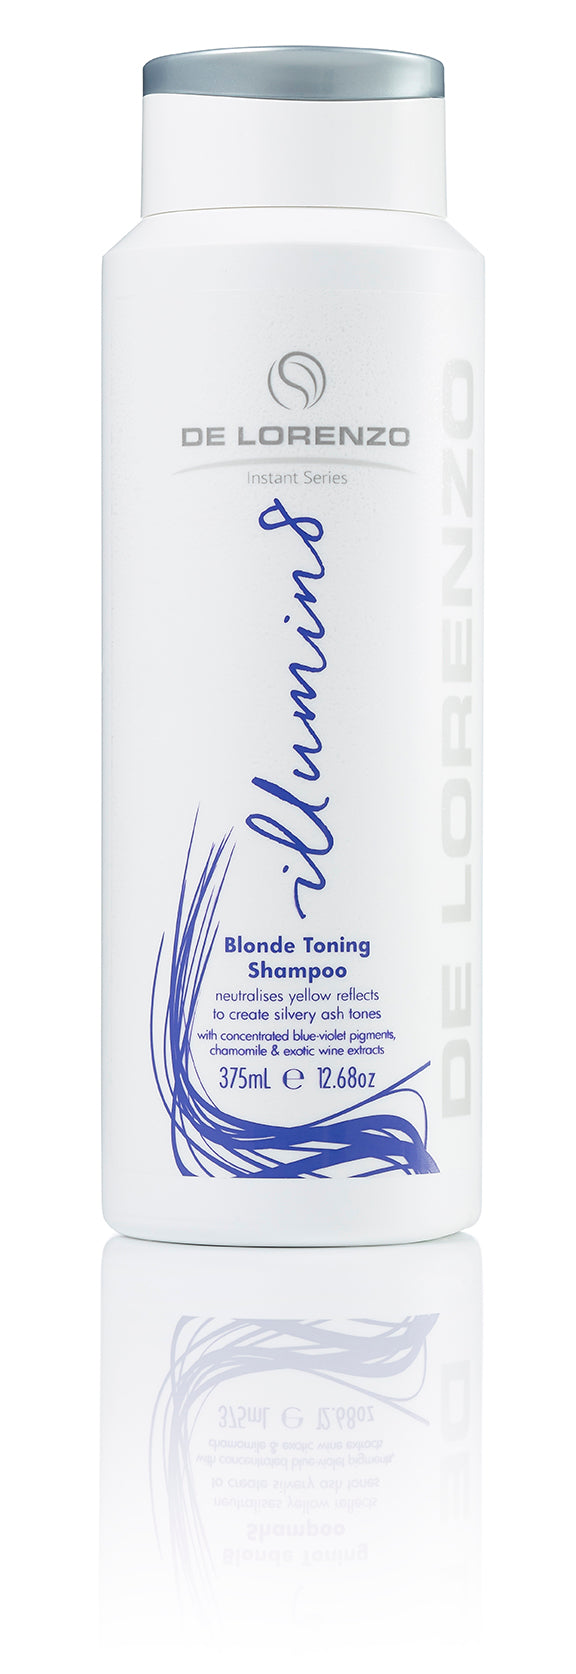 De Lorenzo Instant Illumin8 Blonde Toning Shampoo 375ml